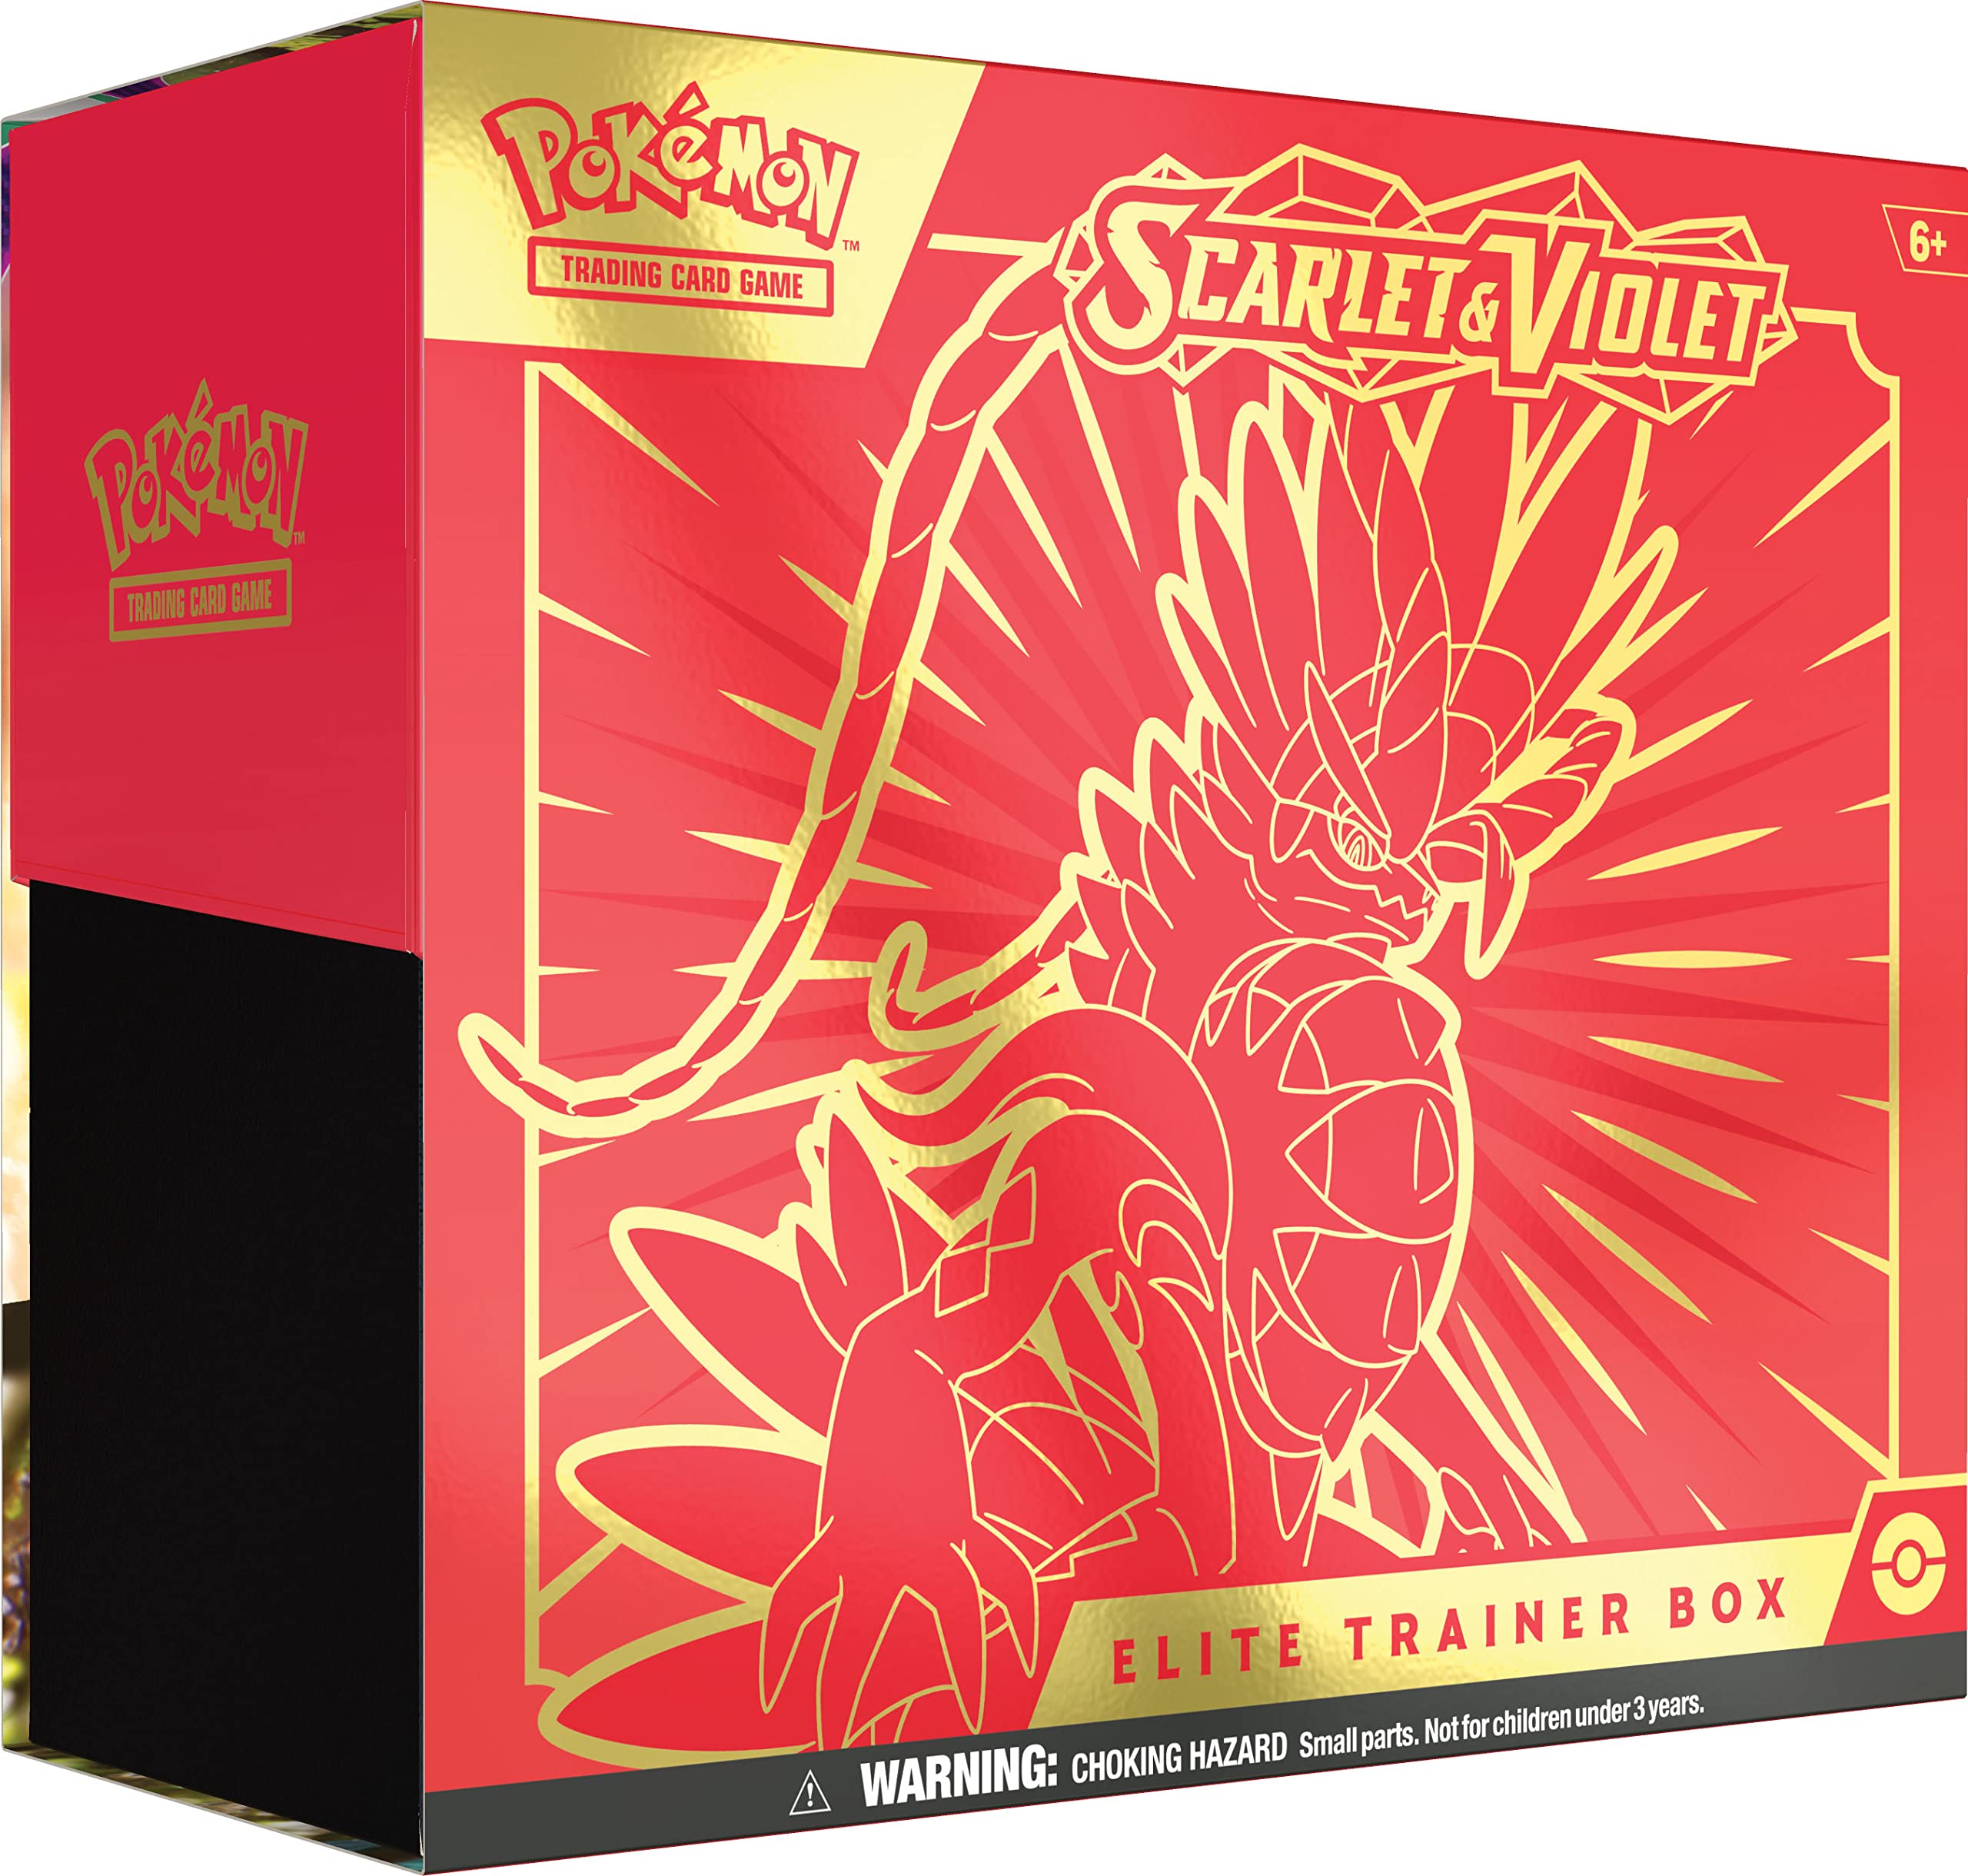 Pokémon TCG: Scarlet & Violet Elite Trainer Box - Koraidon Red (1 Full Art Promo Card, 9 Boosters and Premium Accessories)